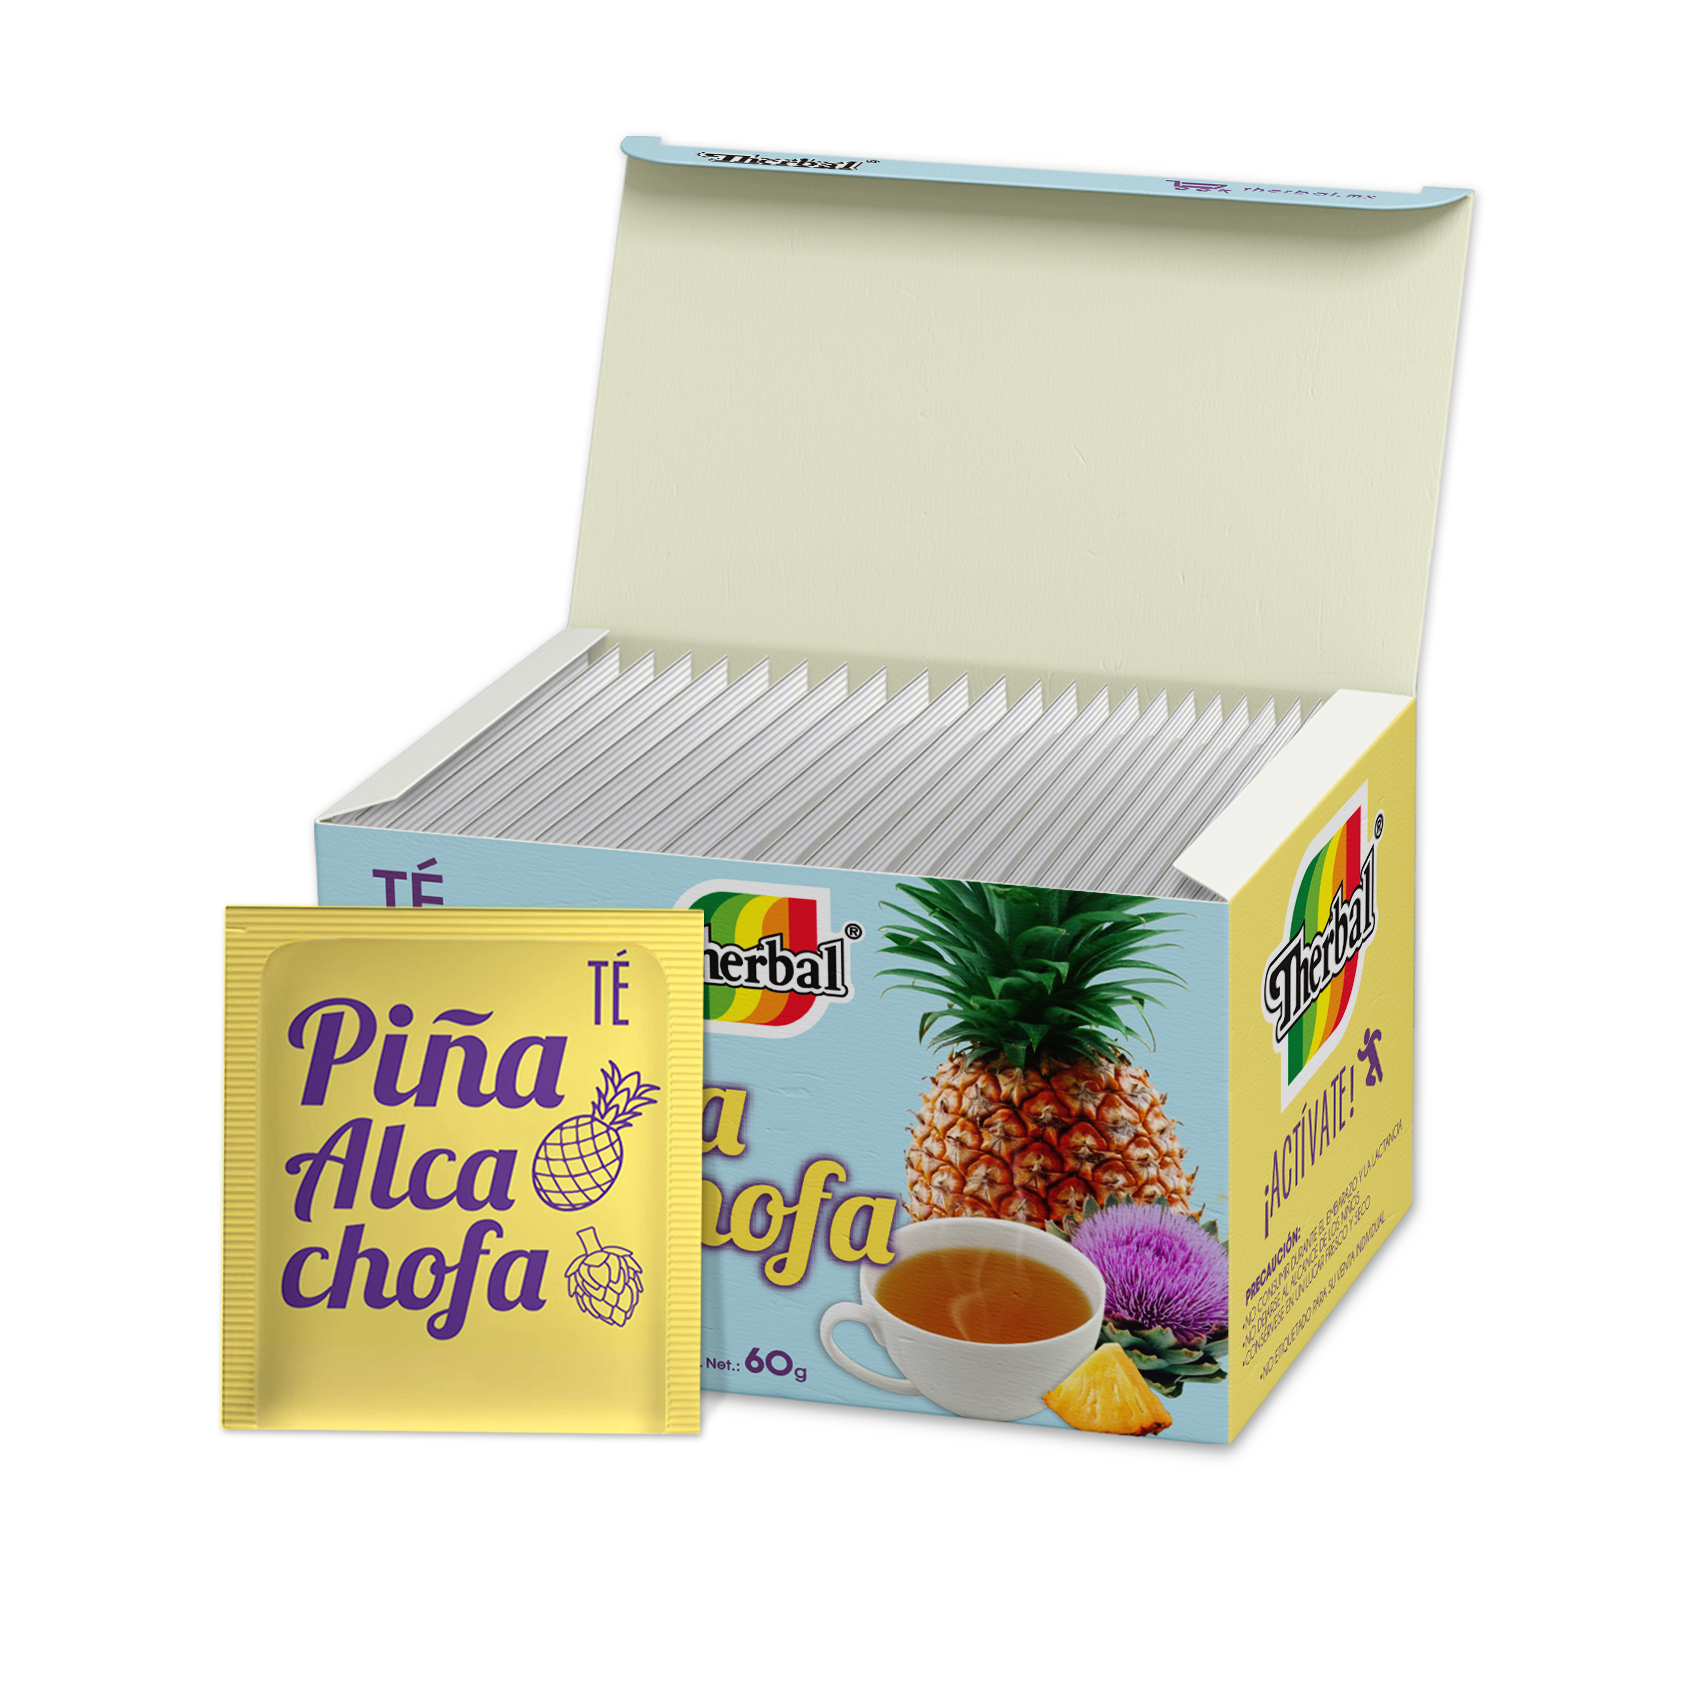 Piña-Alcachofa